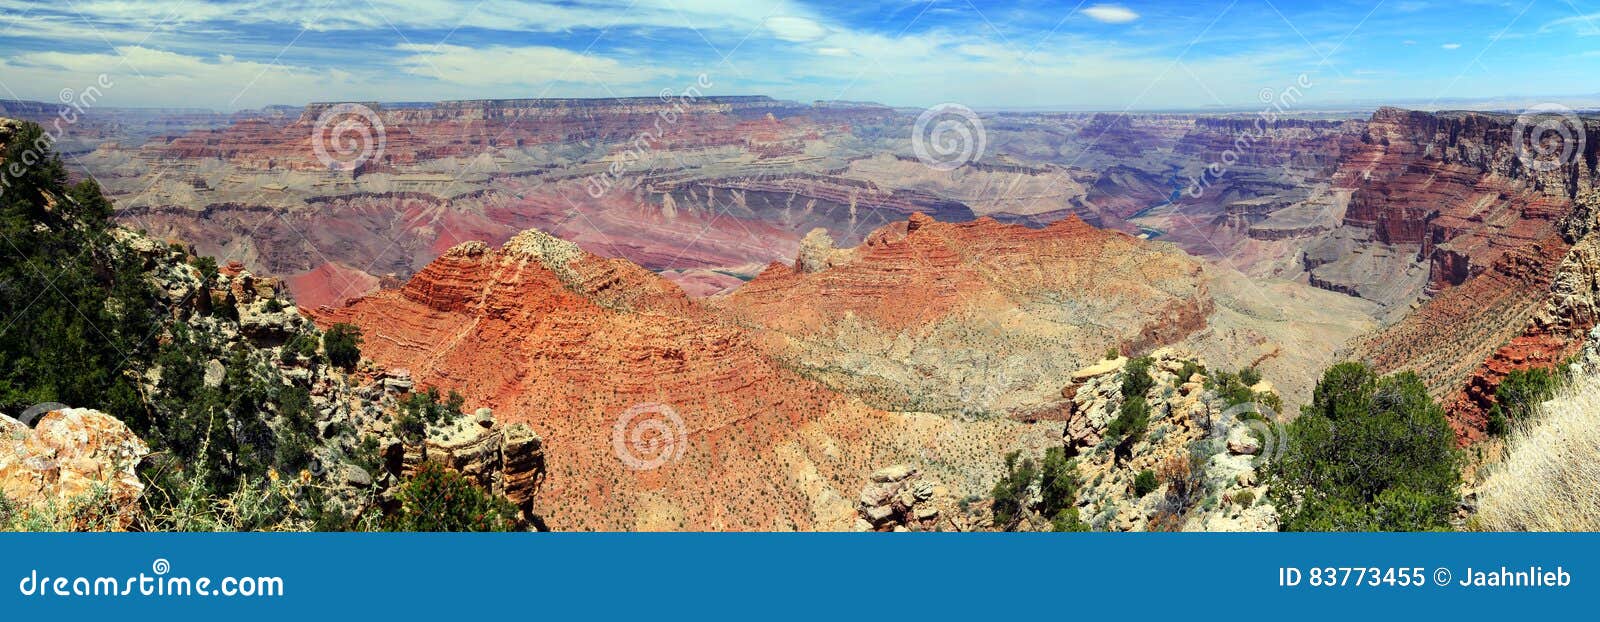 landscape panorama of grand canyon from navajo point, grand canyon national park, arizona